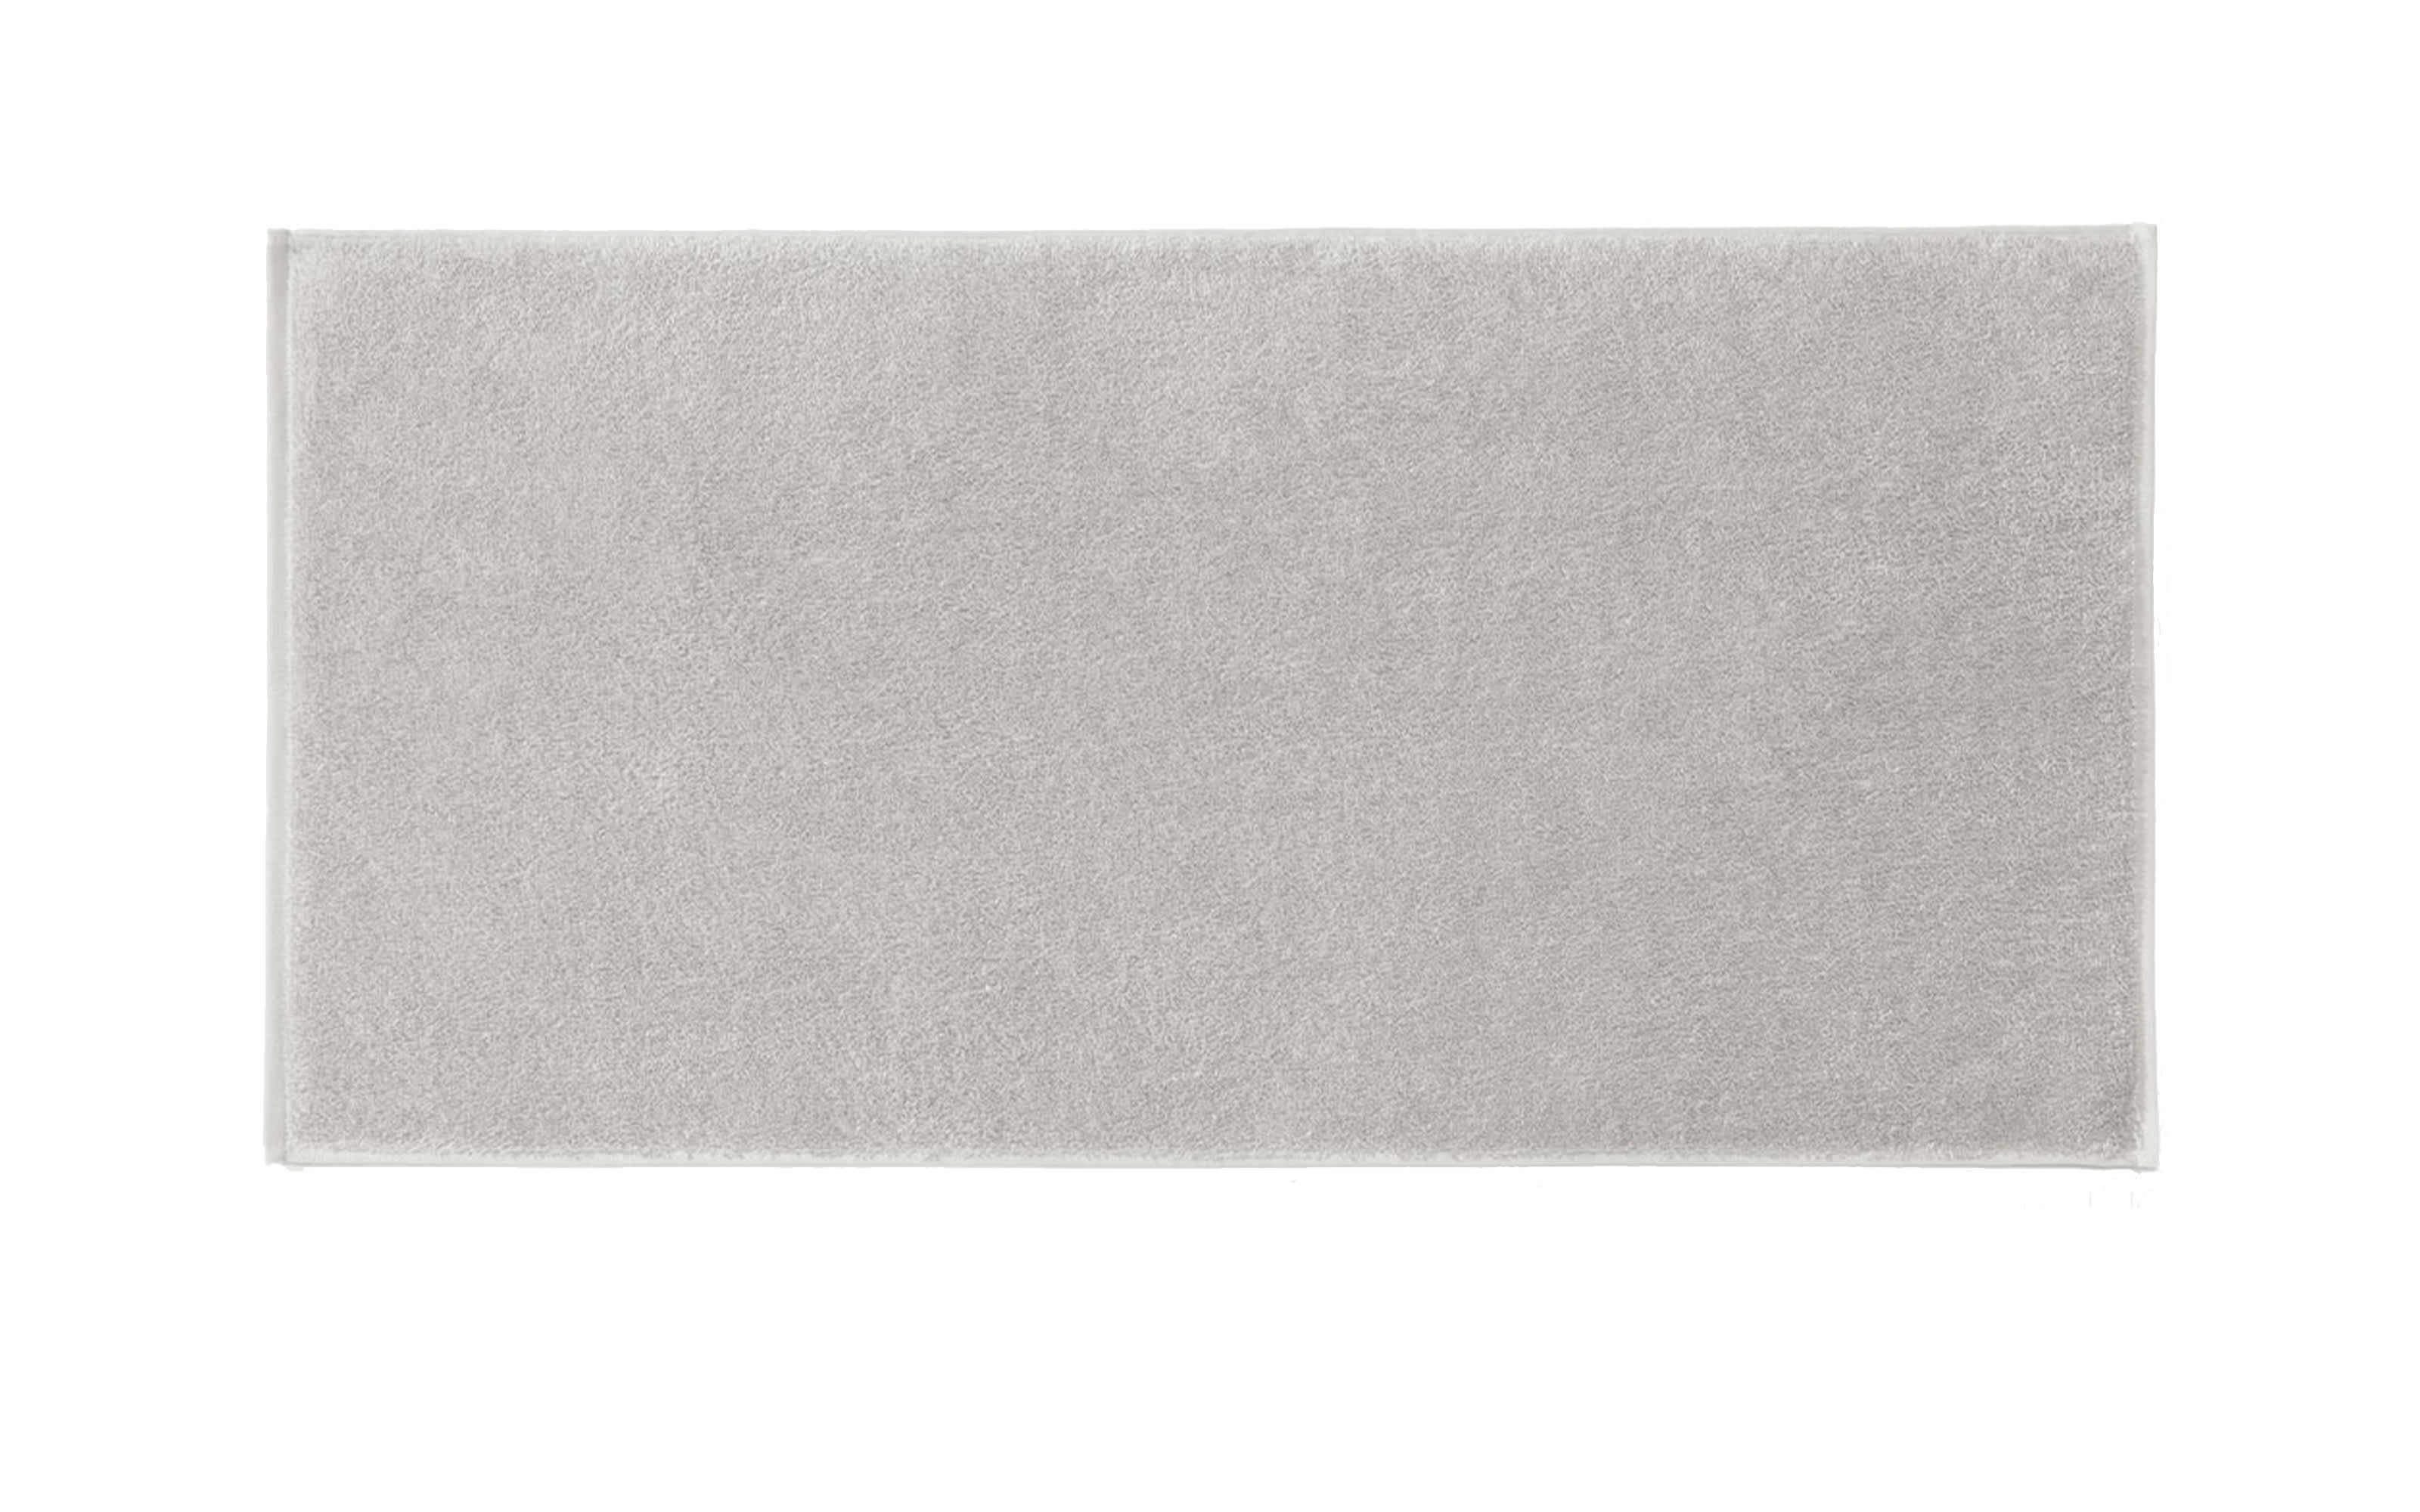 Handtuch New Space, urban grey, 50 x 100 cm